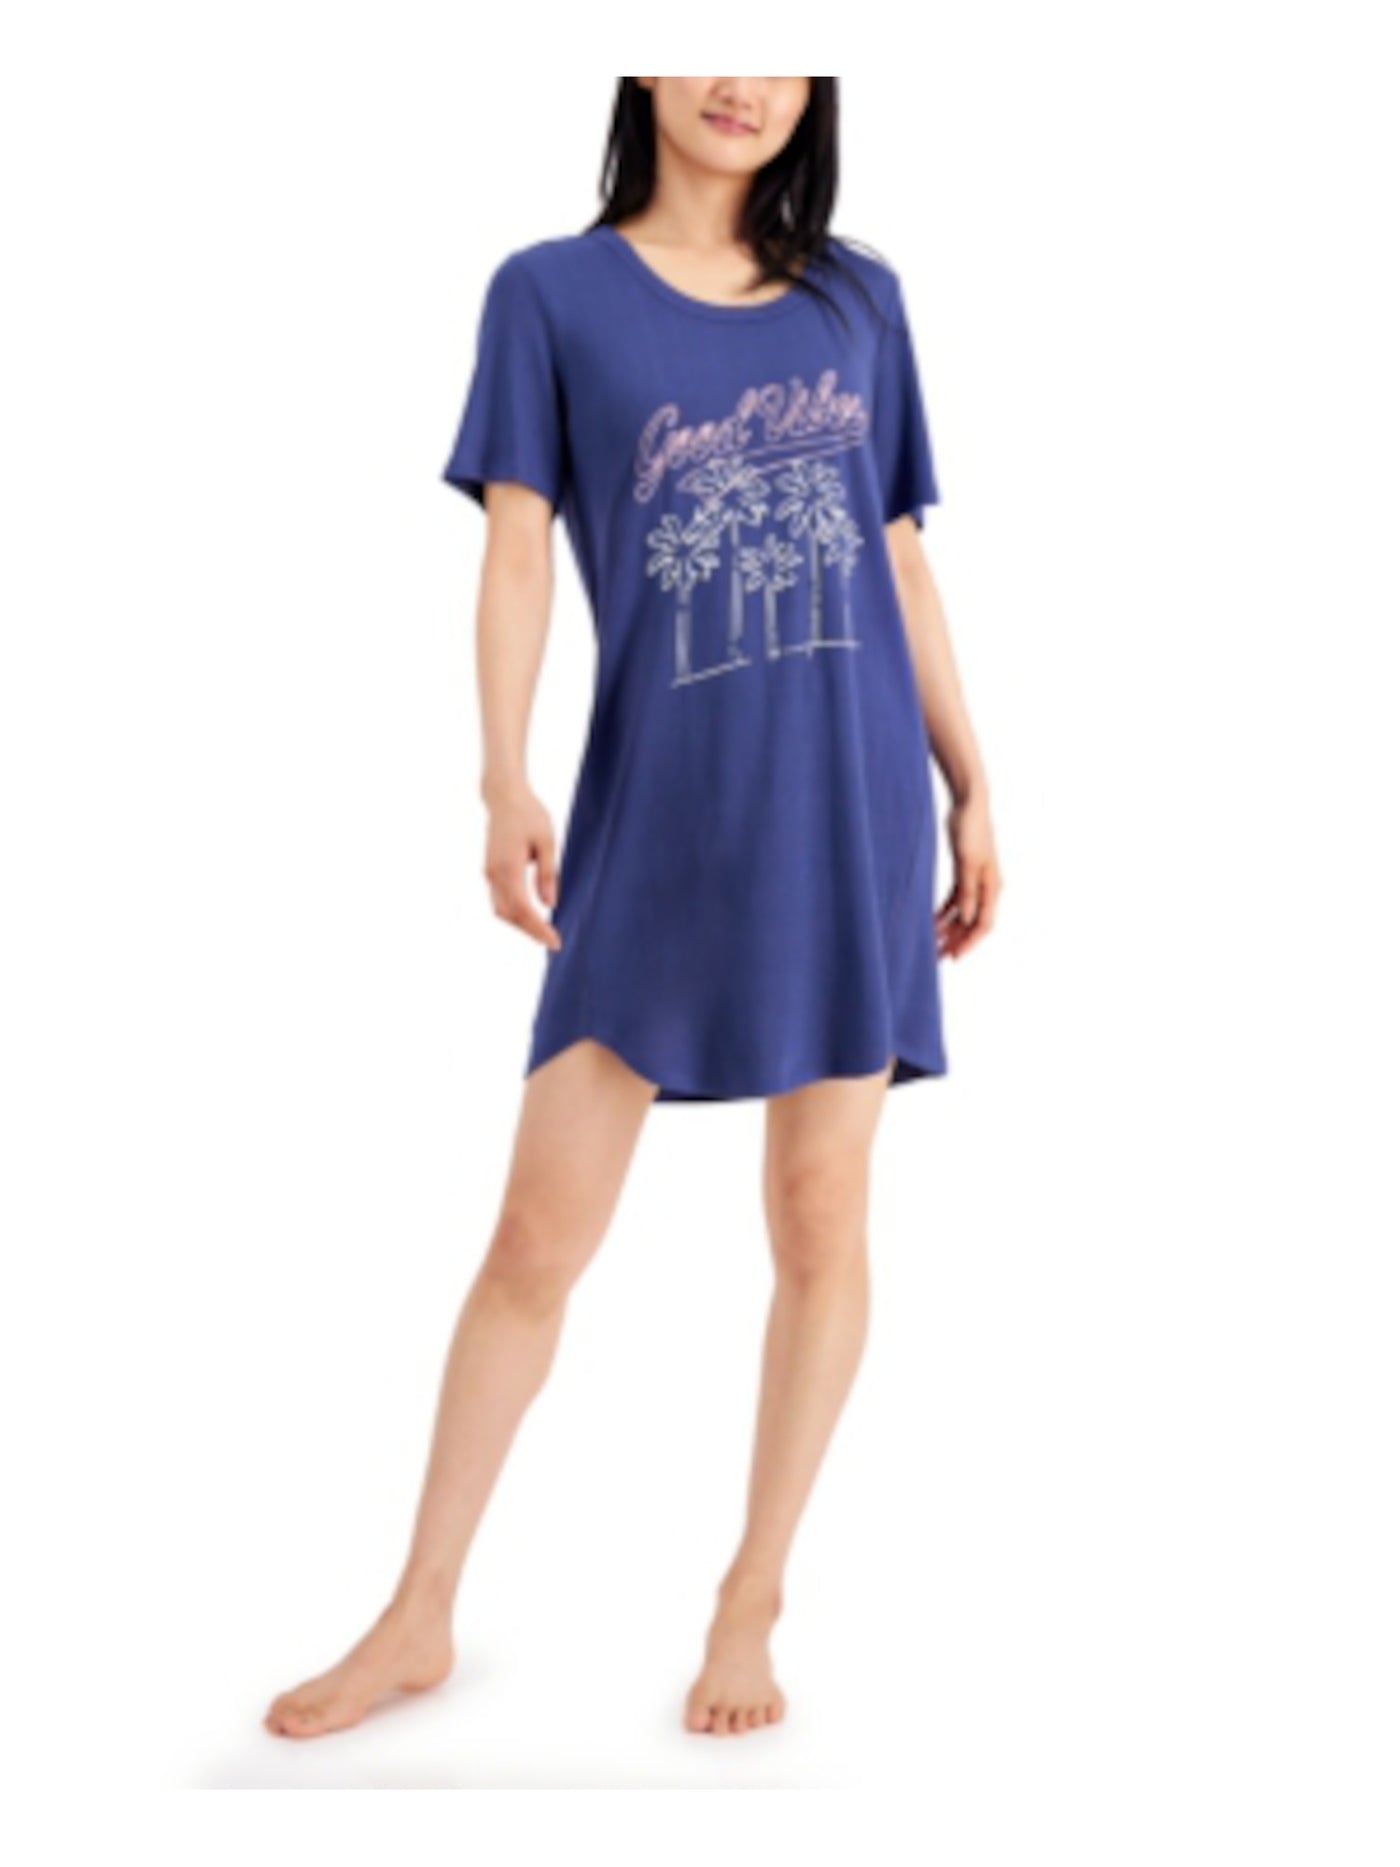 JENNI Intimates Navy Graphic Curved Hem Sleep Shirt Pajama Top XS